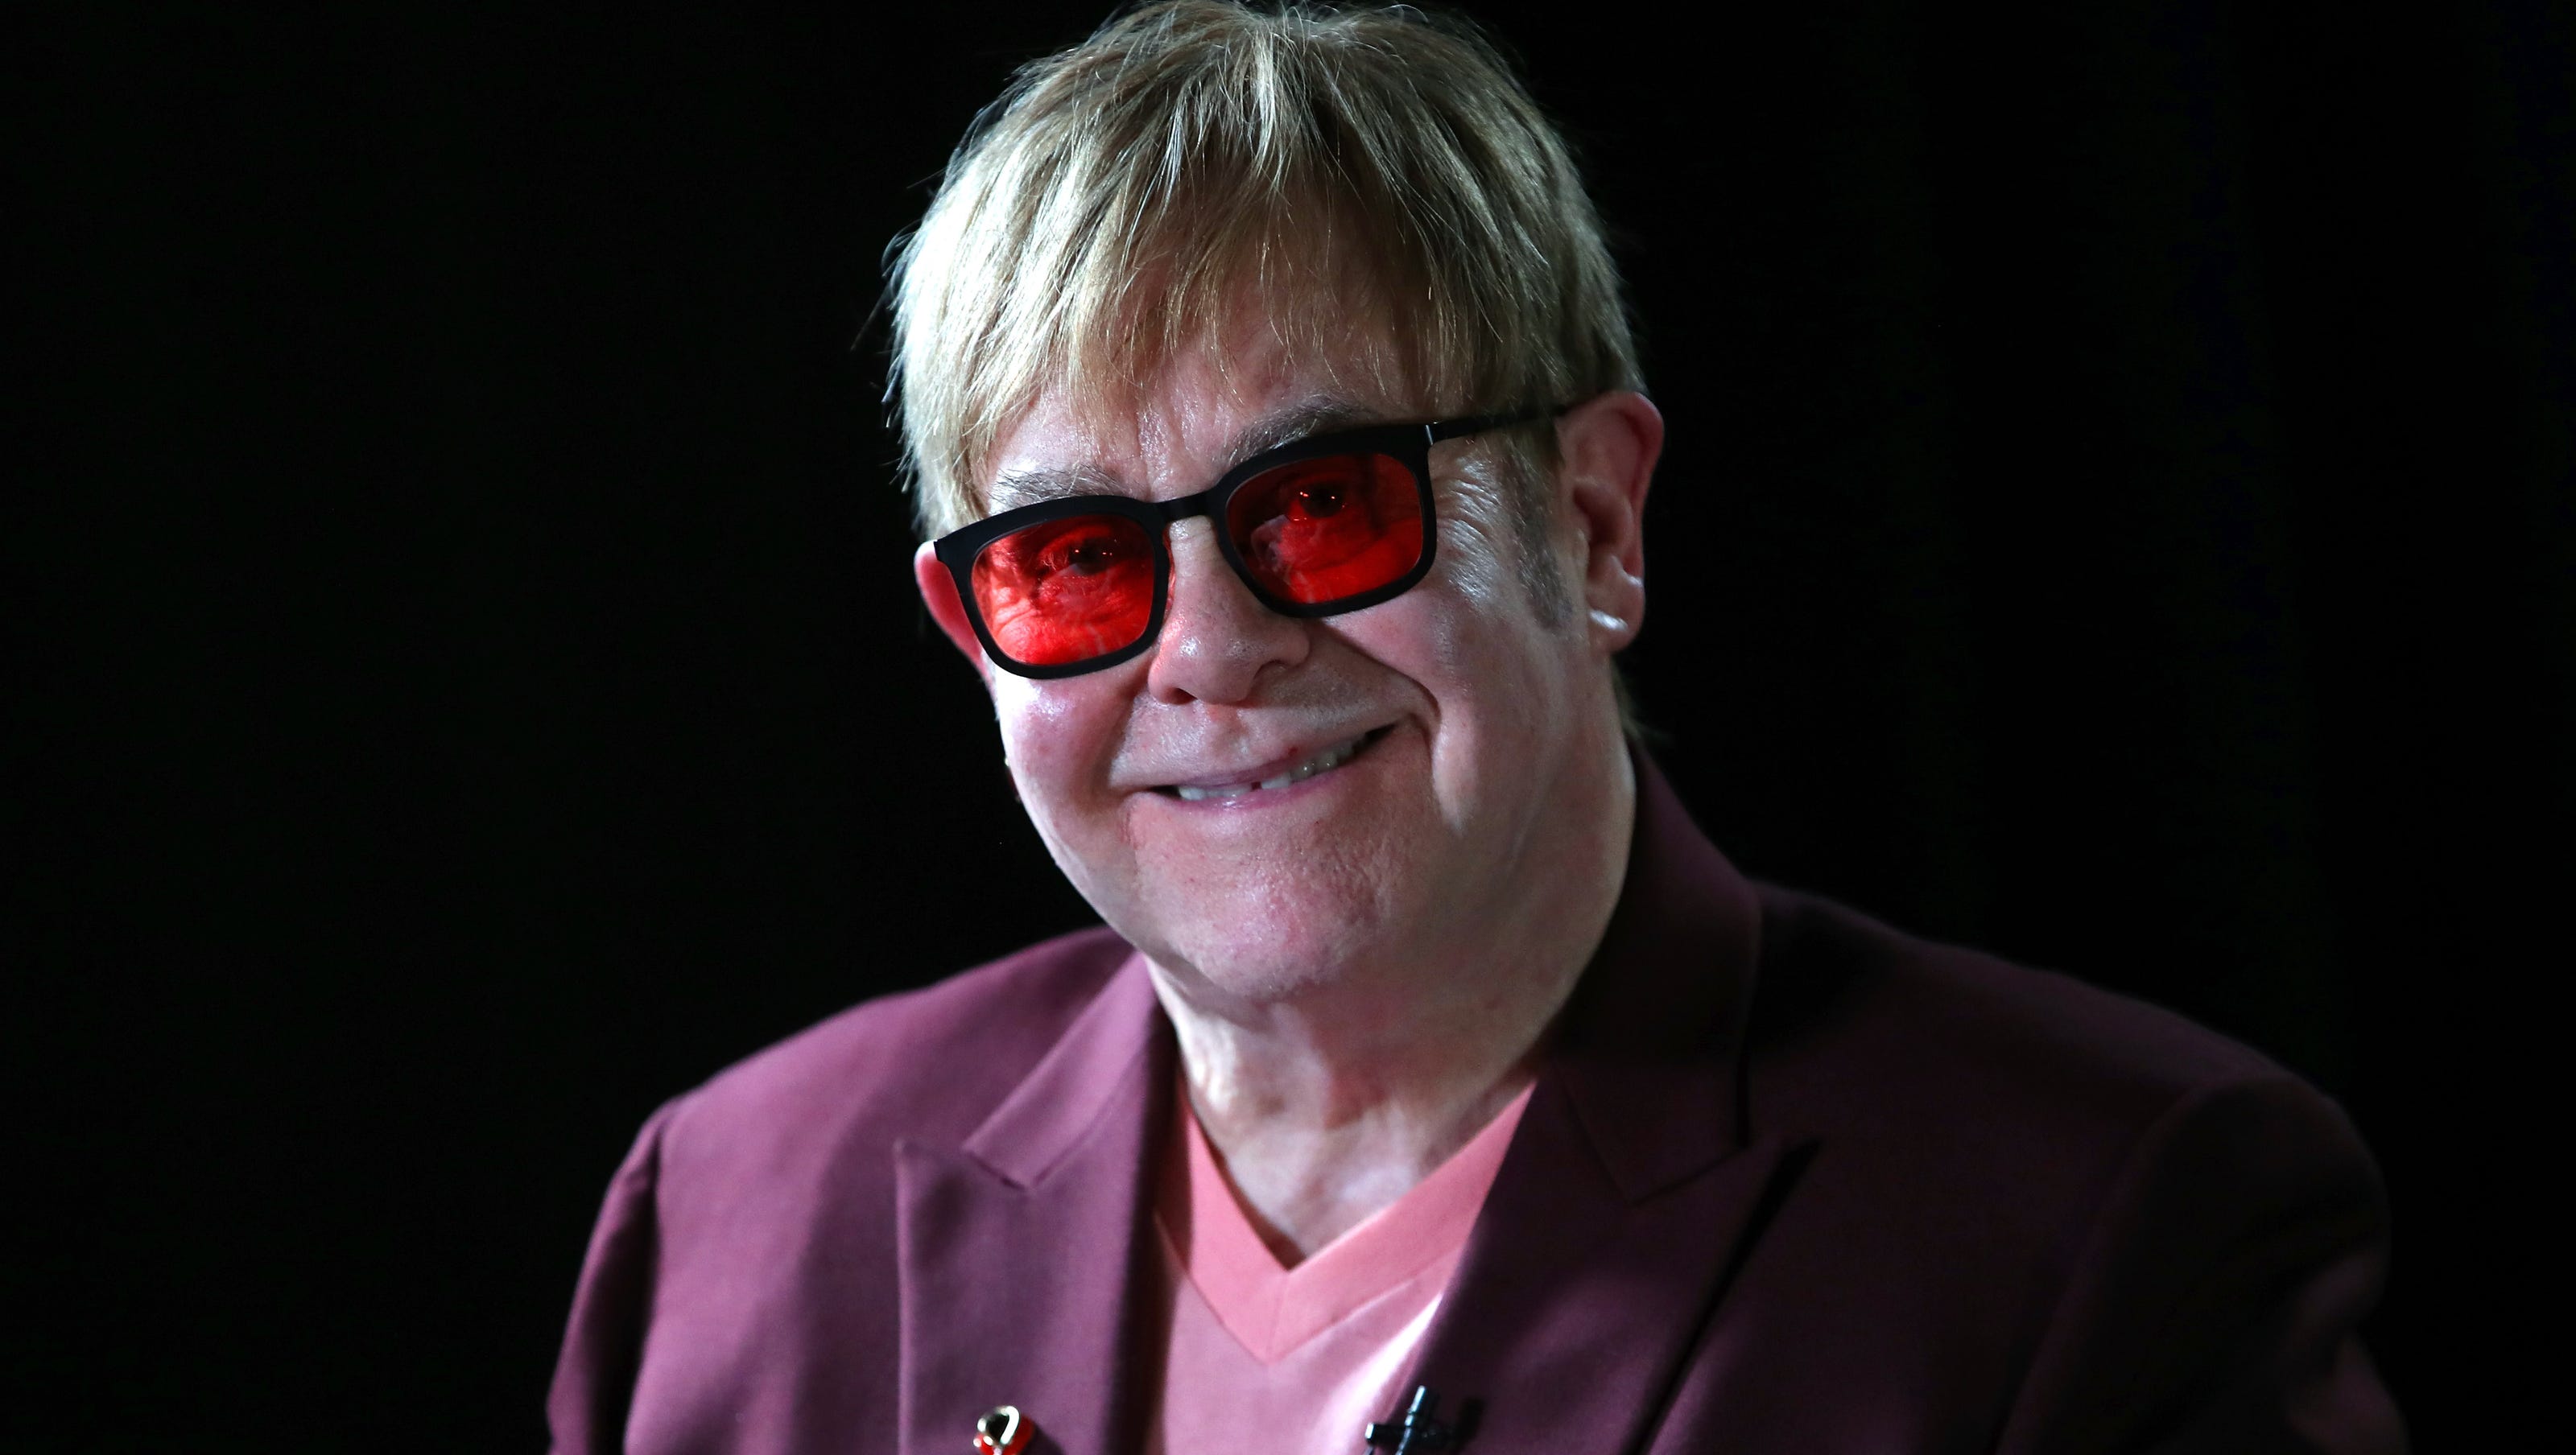 Elton John asks tech world to expand HIV fight at Princess Diana event